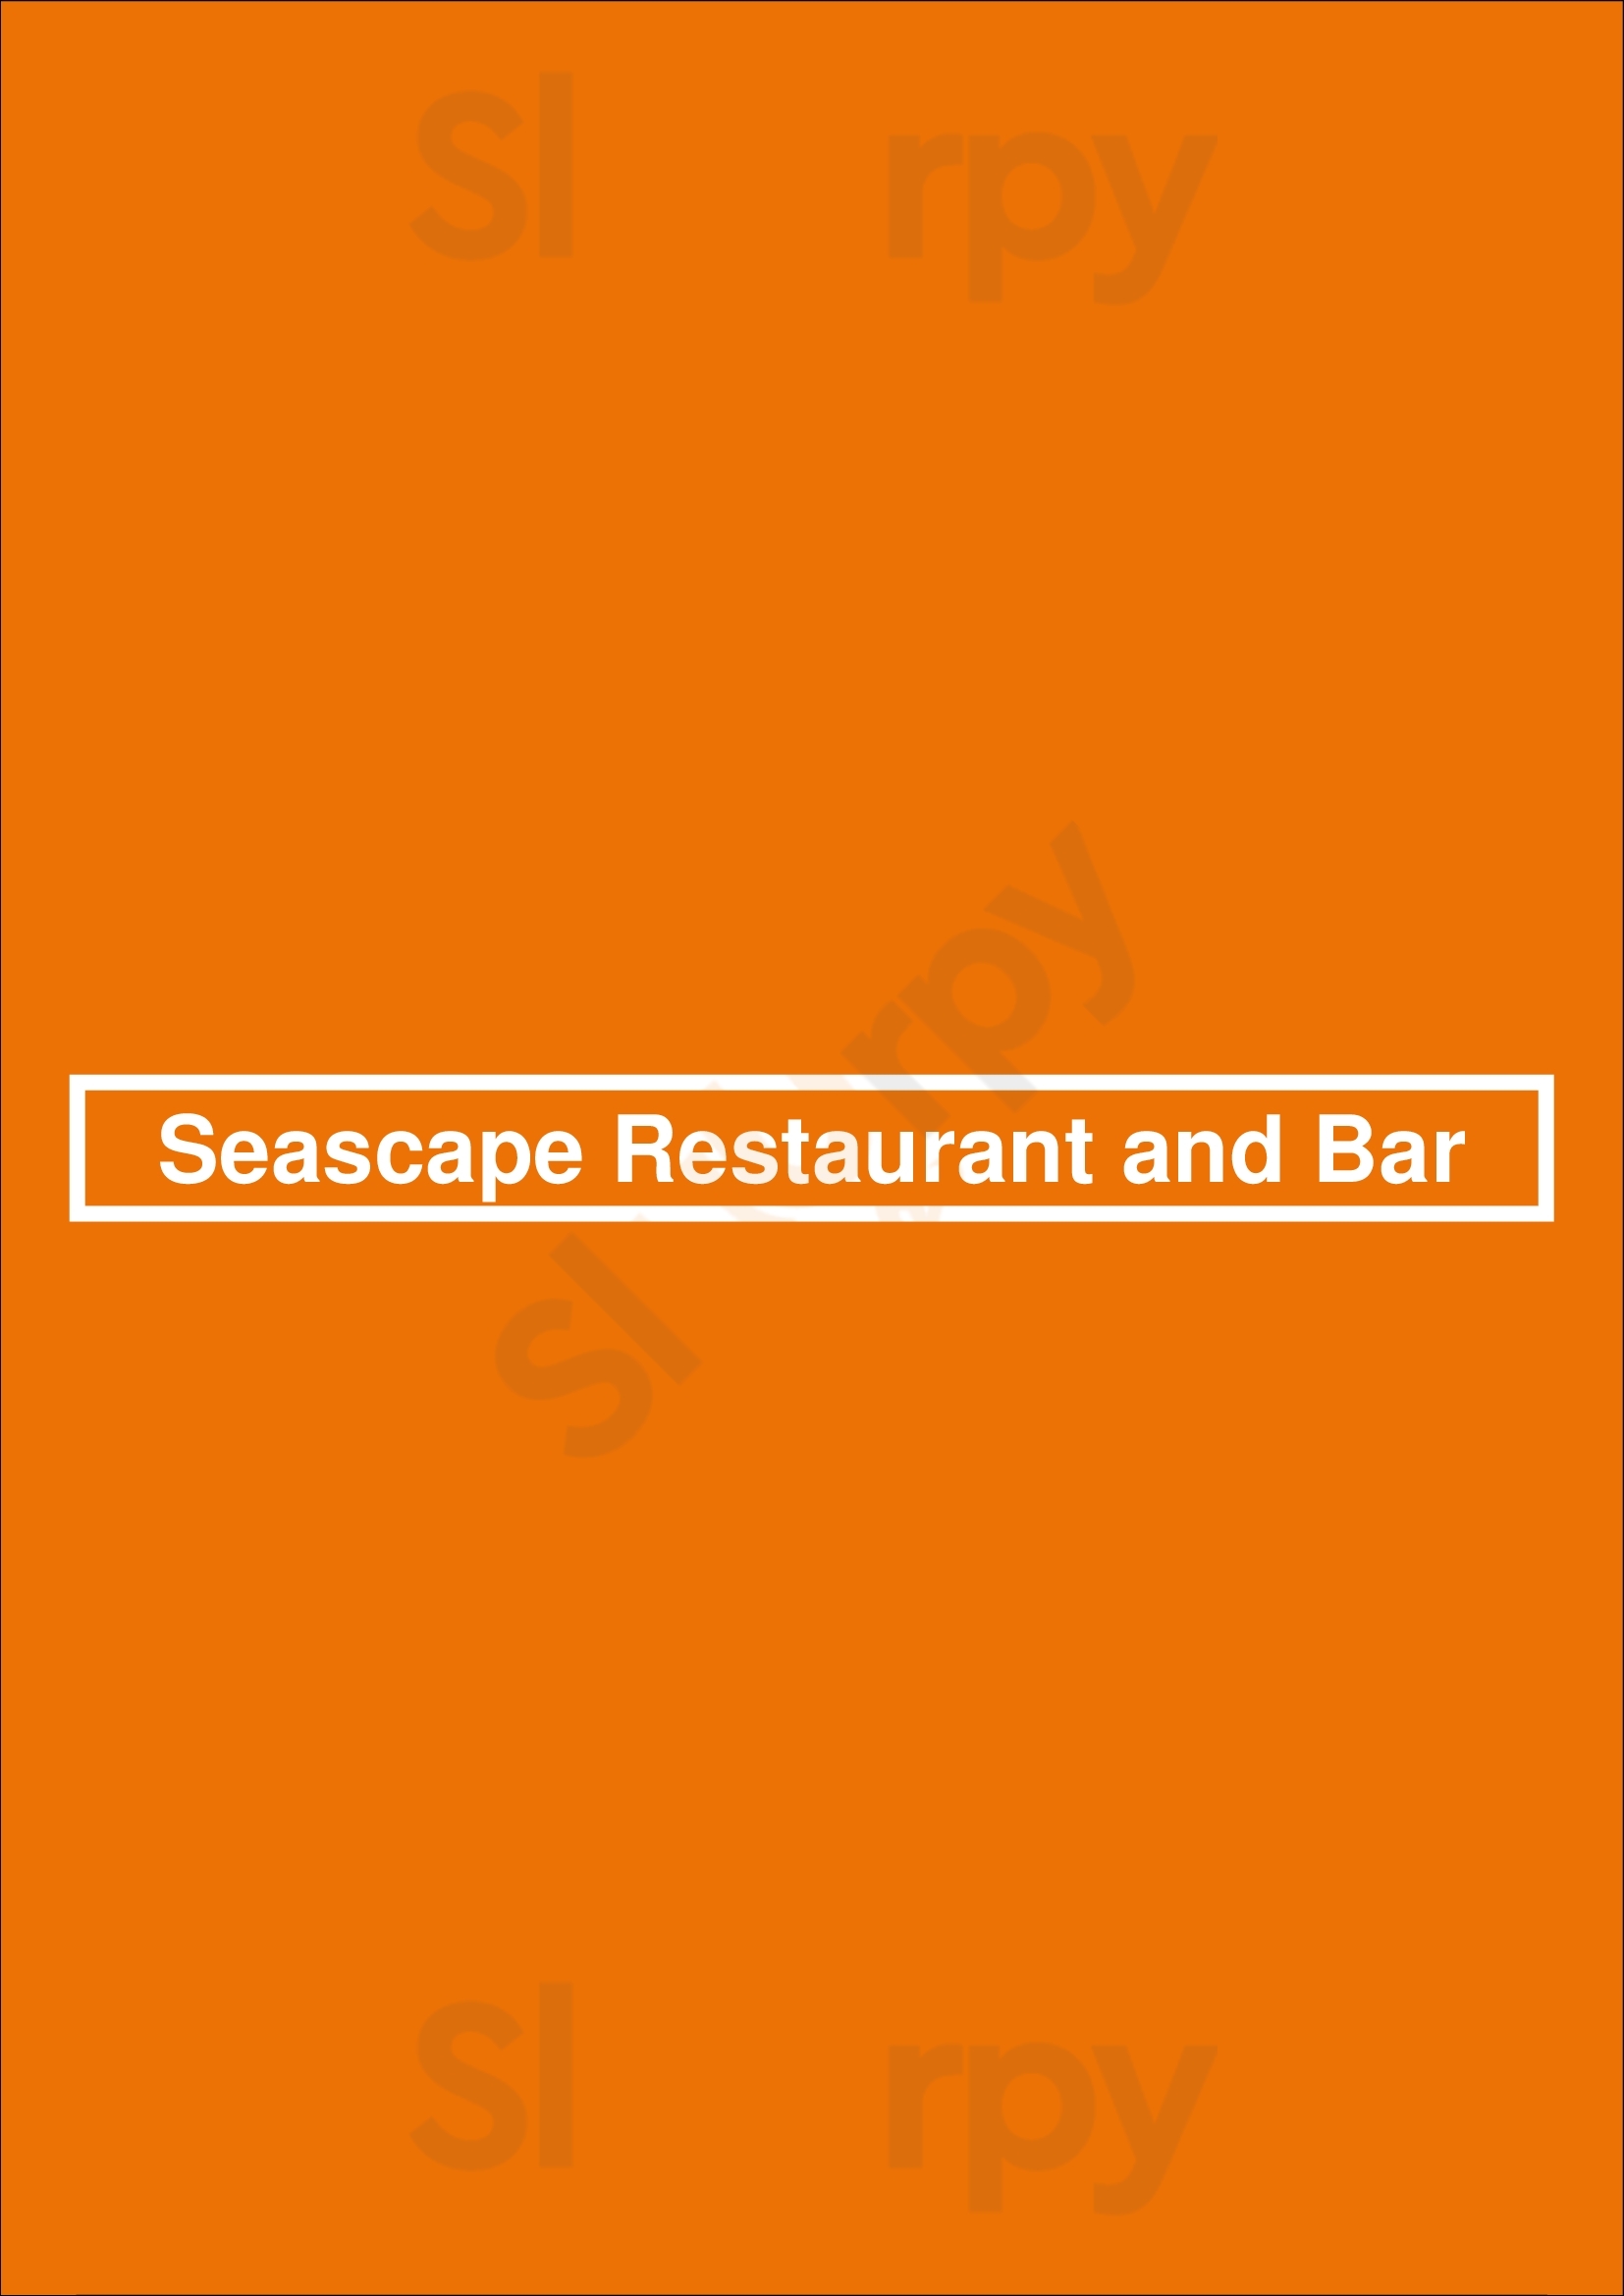 Seascape Restaurant And Bar Surfers Paradise Menu - 1